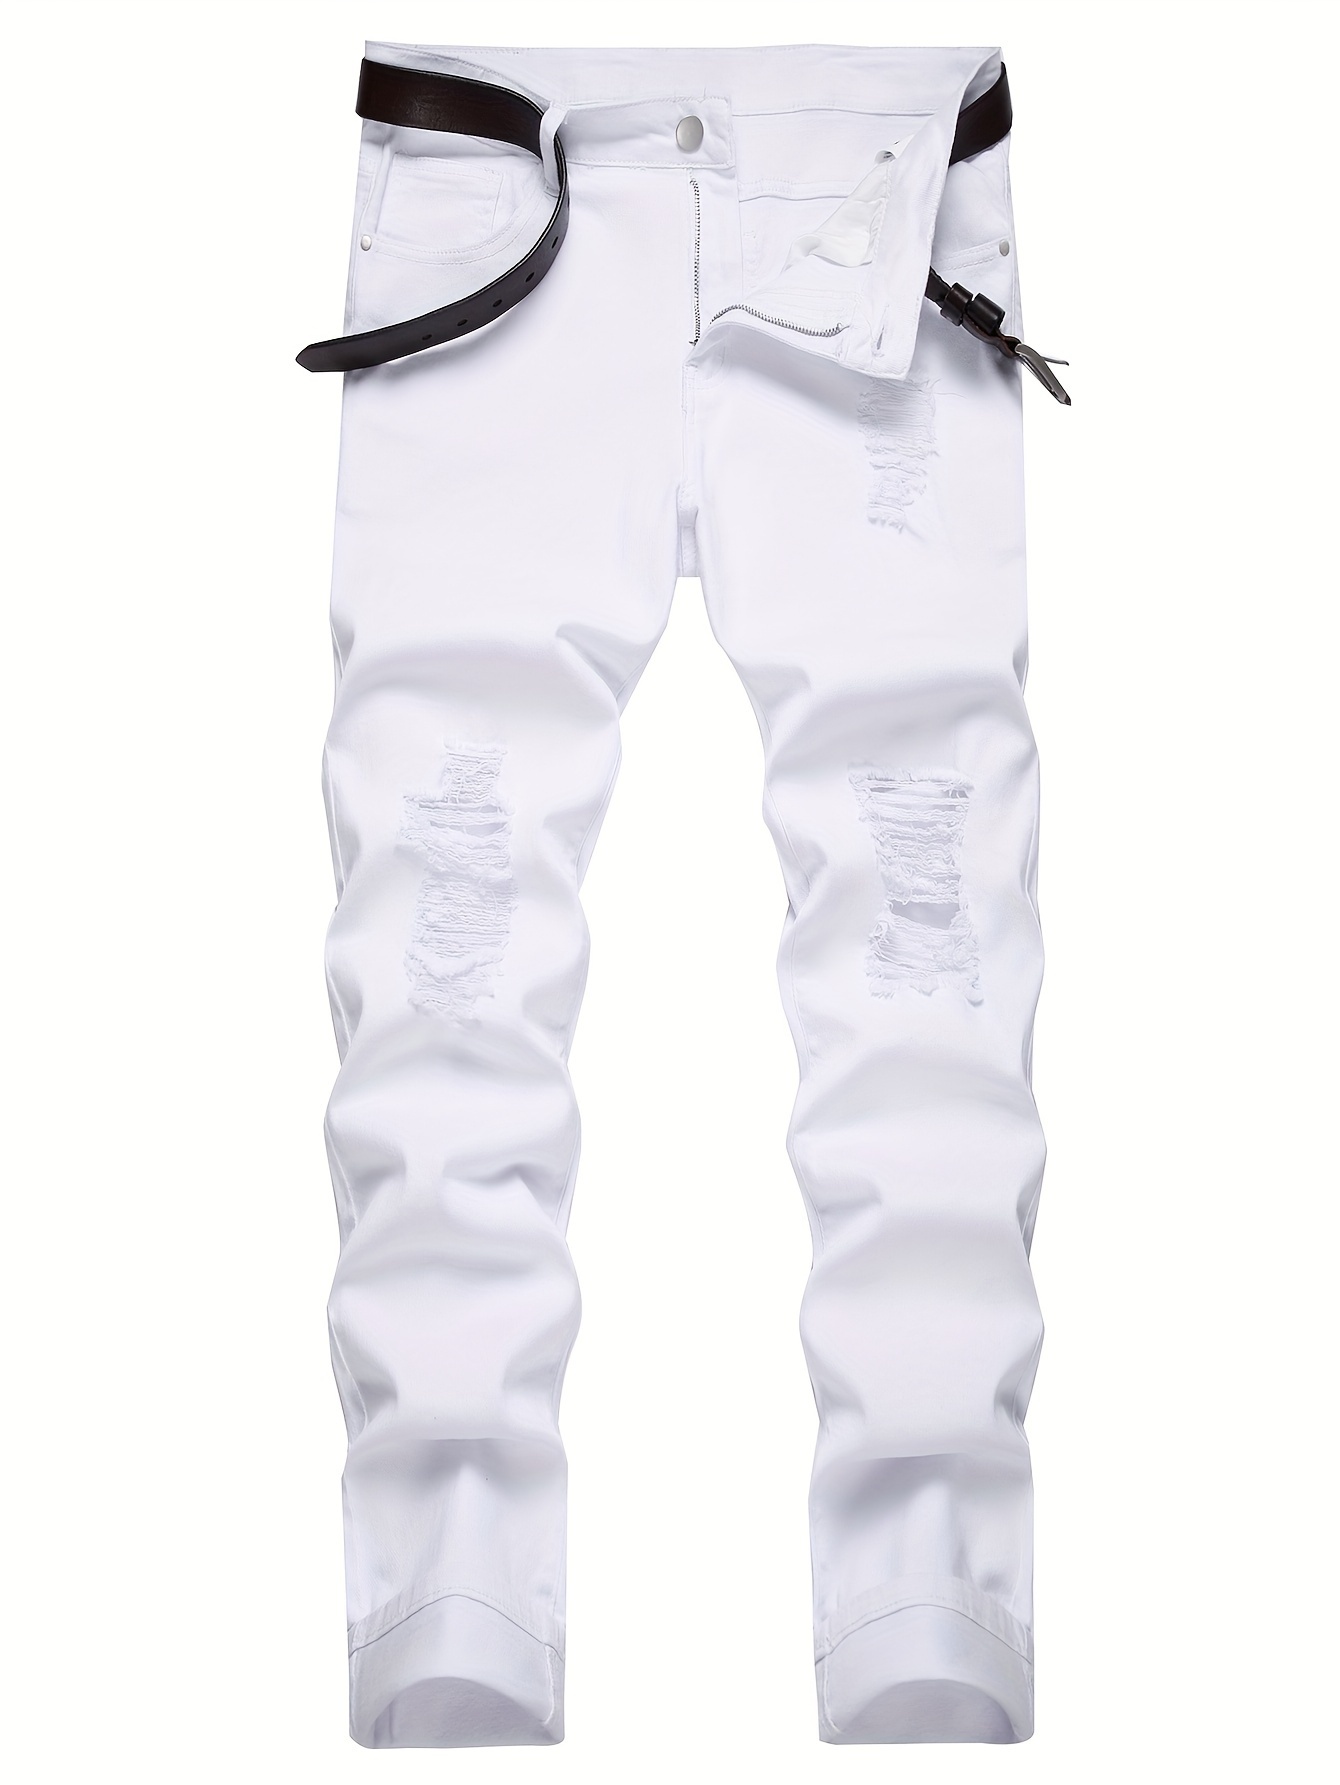 Jeans blancos para hombre rasgados - Blanco / 28